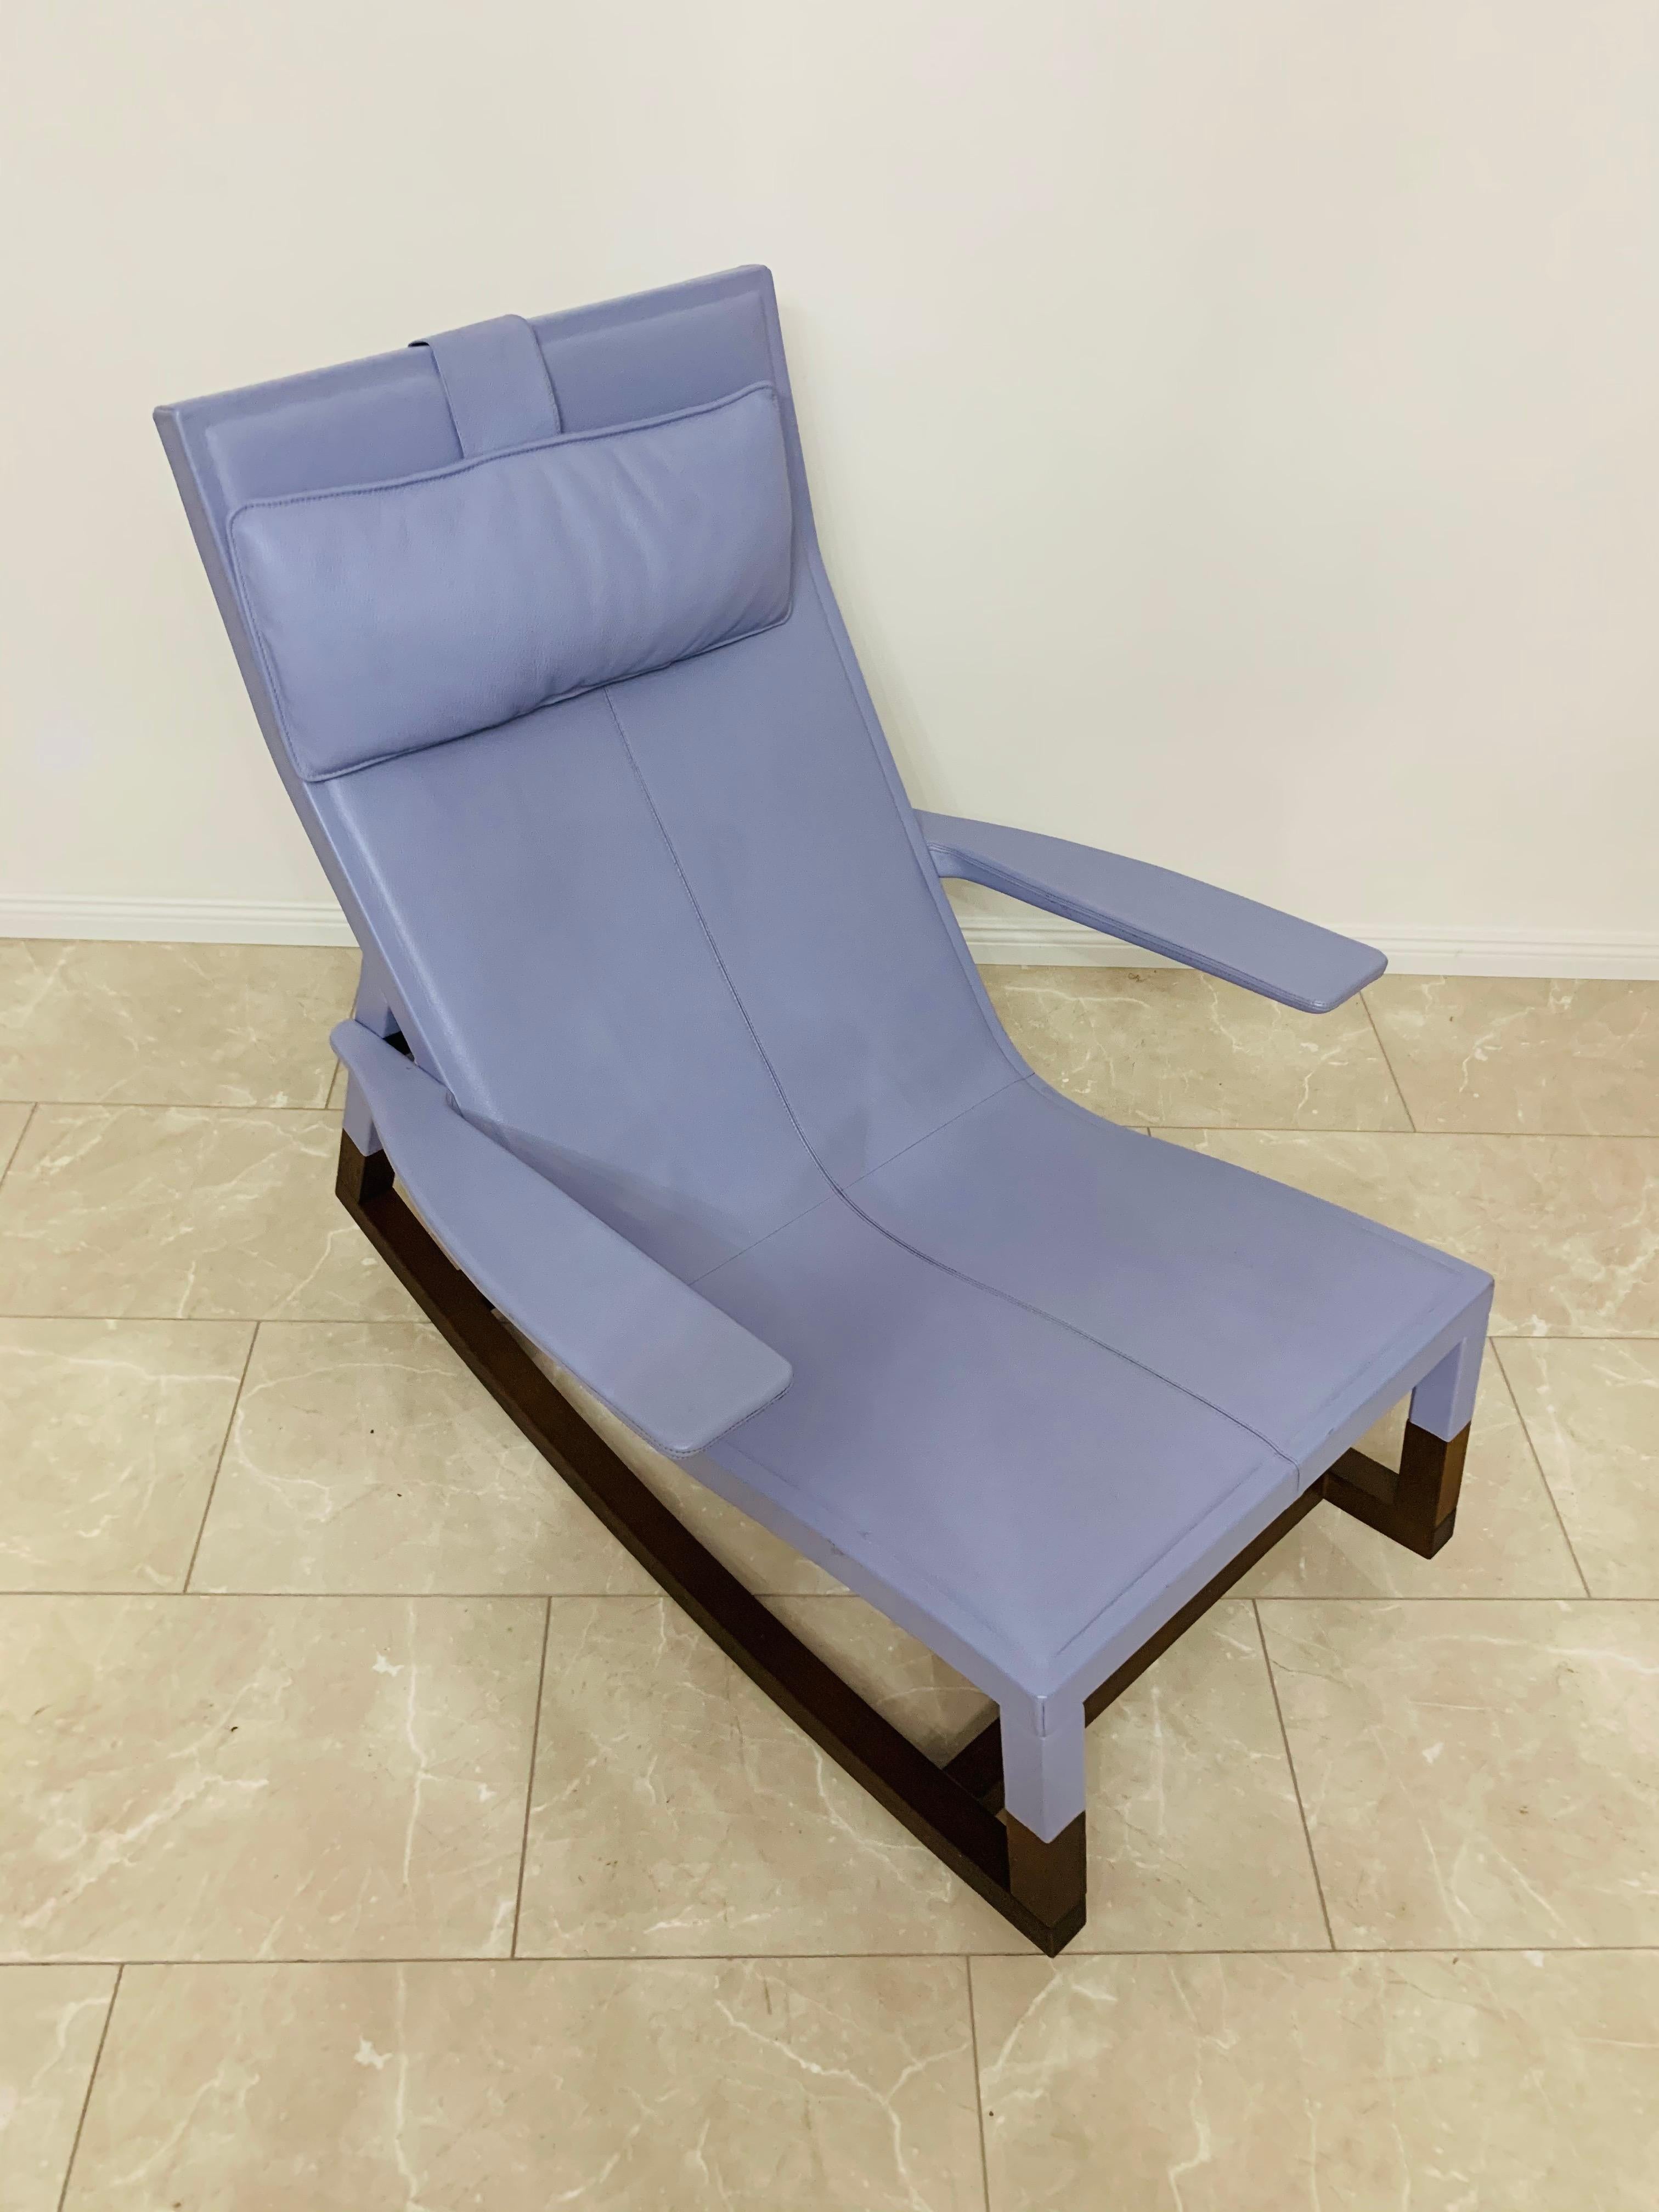 exclusive original Designer Chair light blue leather Poltrona Frau Don'Do  For Sale 6